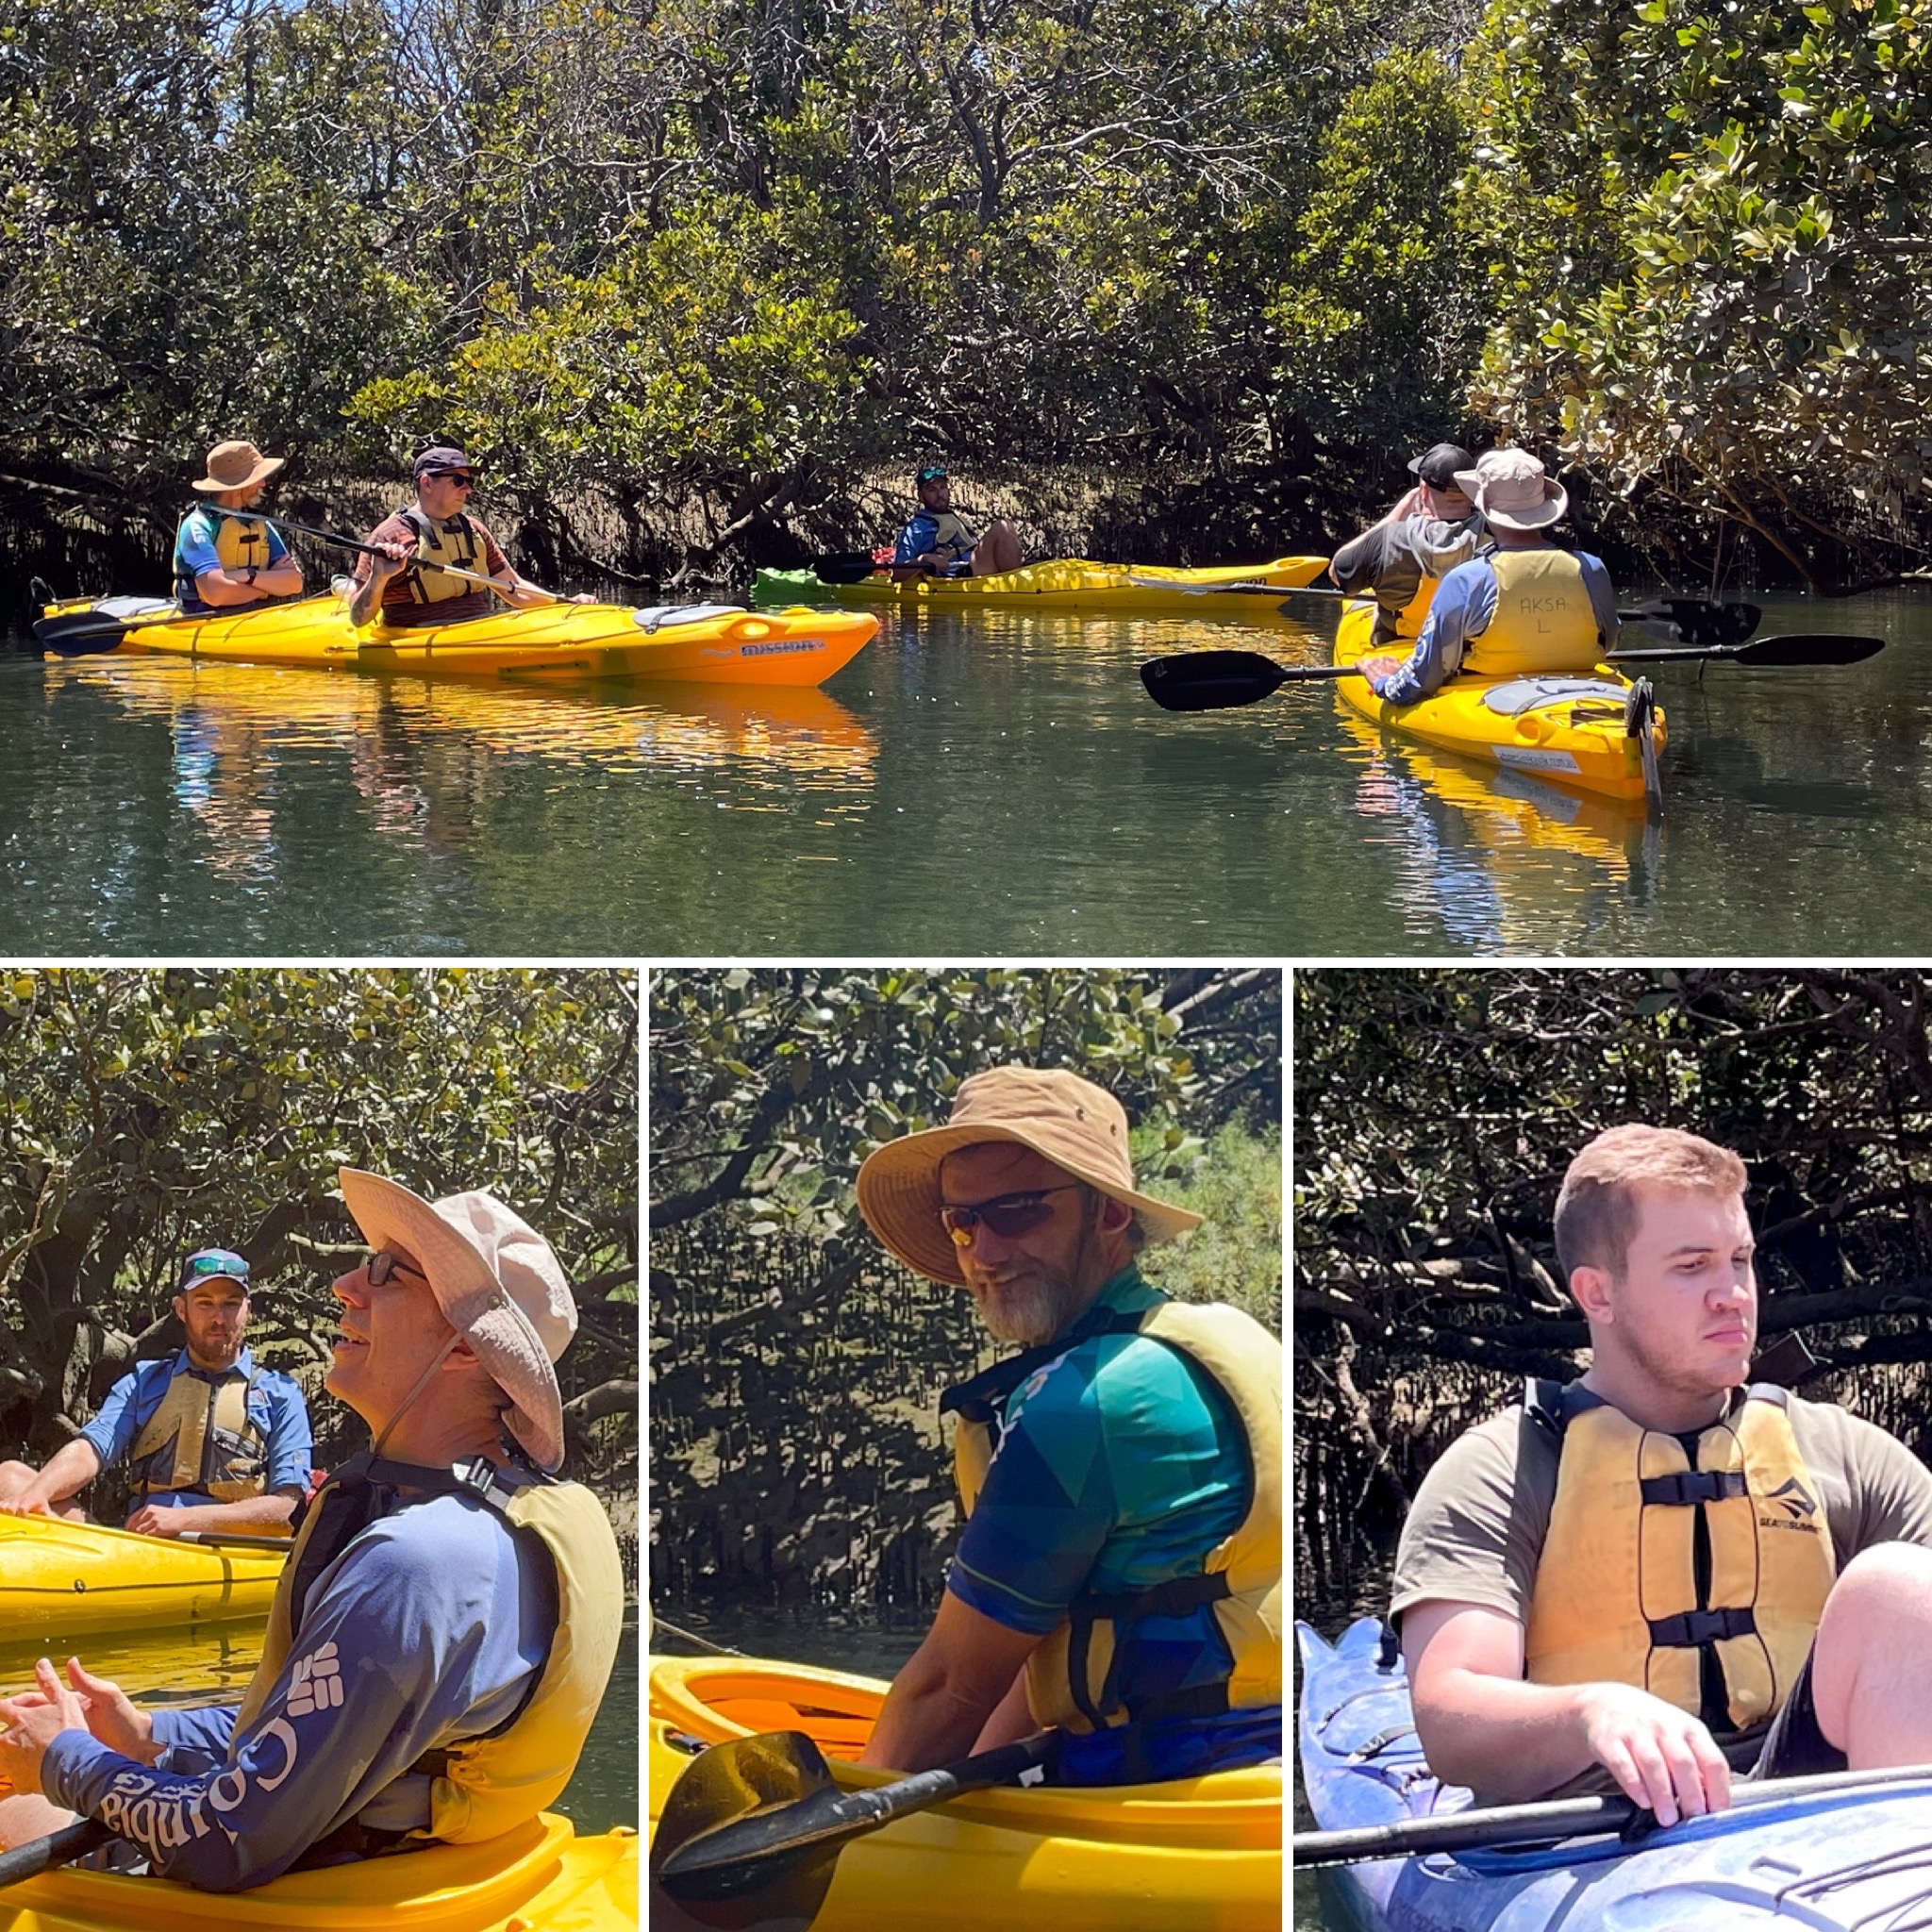 More kayaking in the mangroves